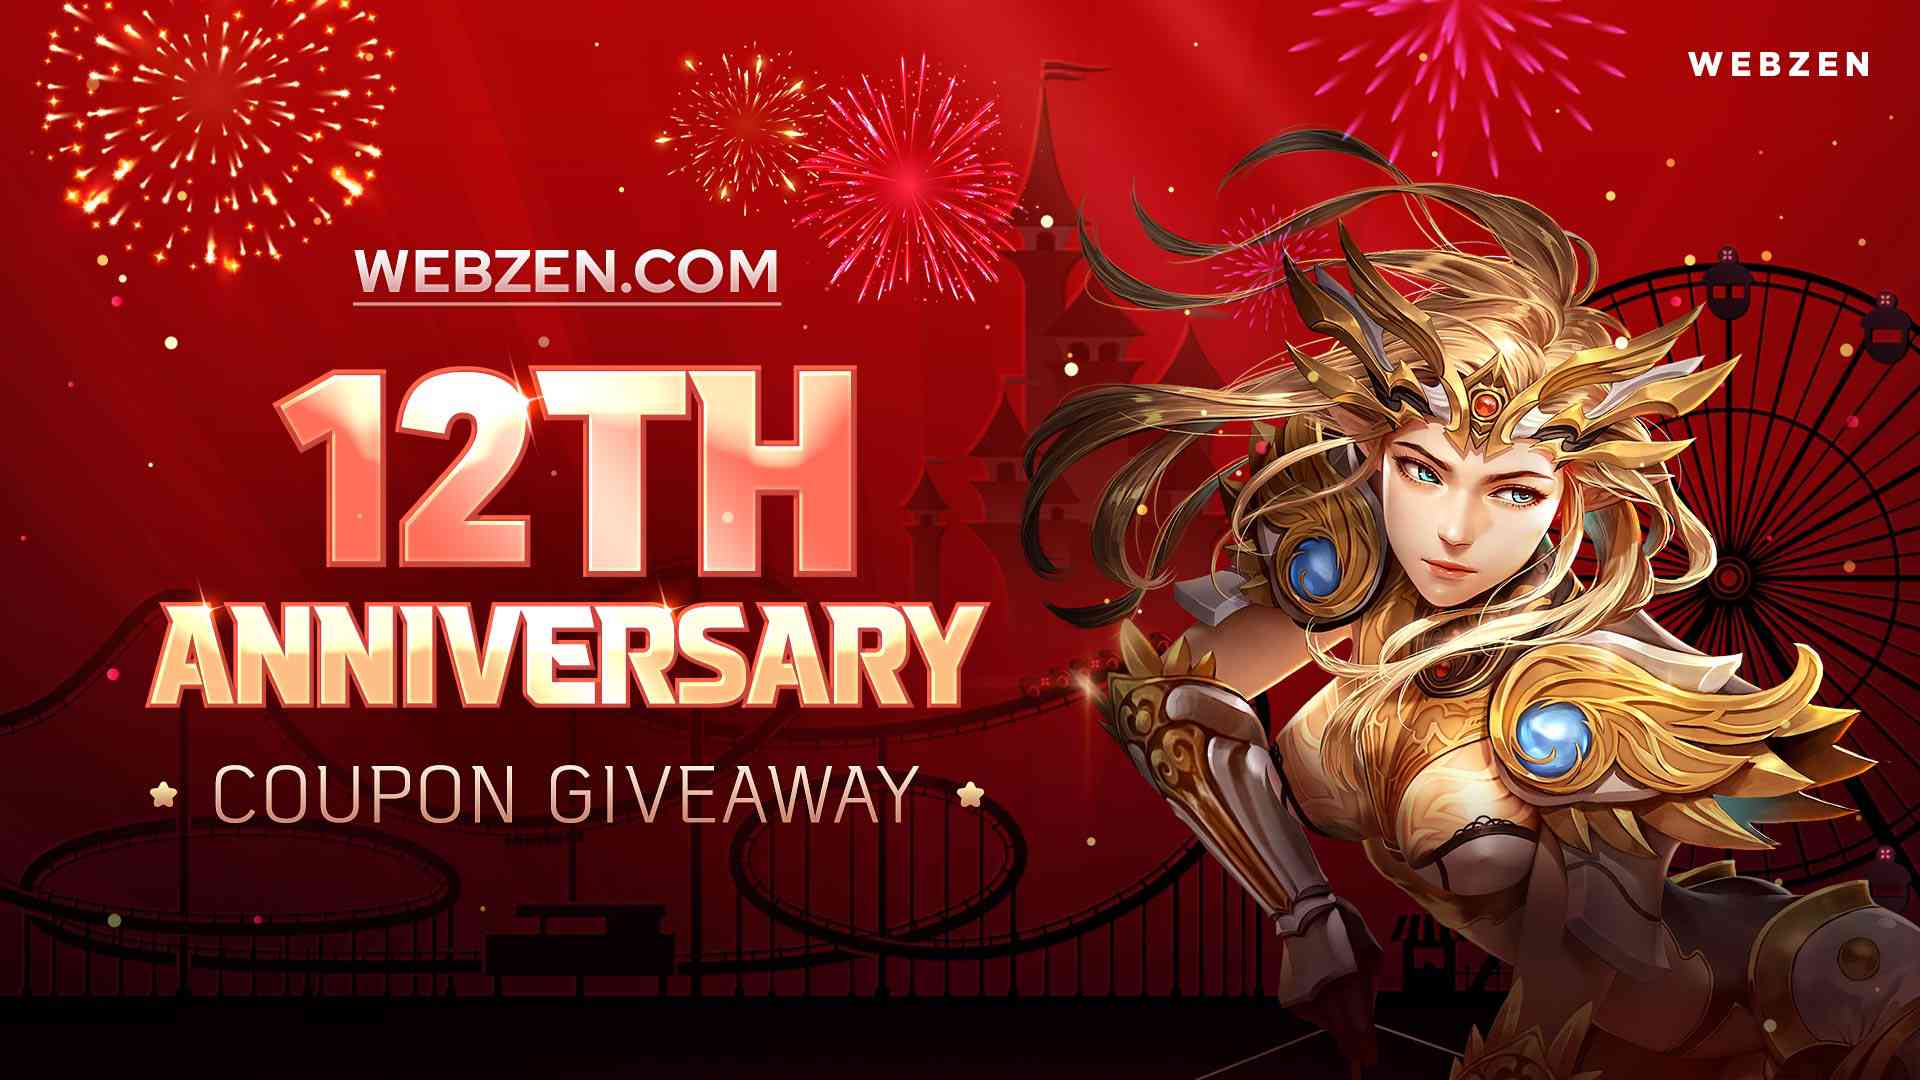 WEBZEN.COM’s 12th Anniversary Giveaway 9